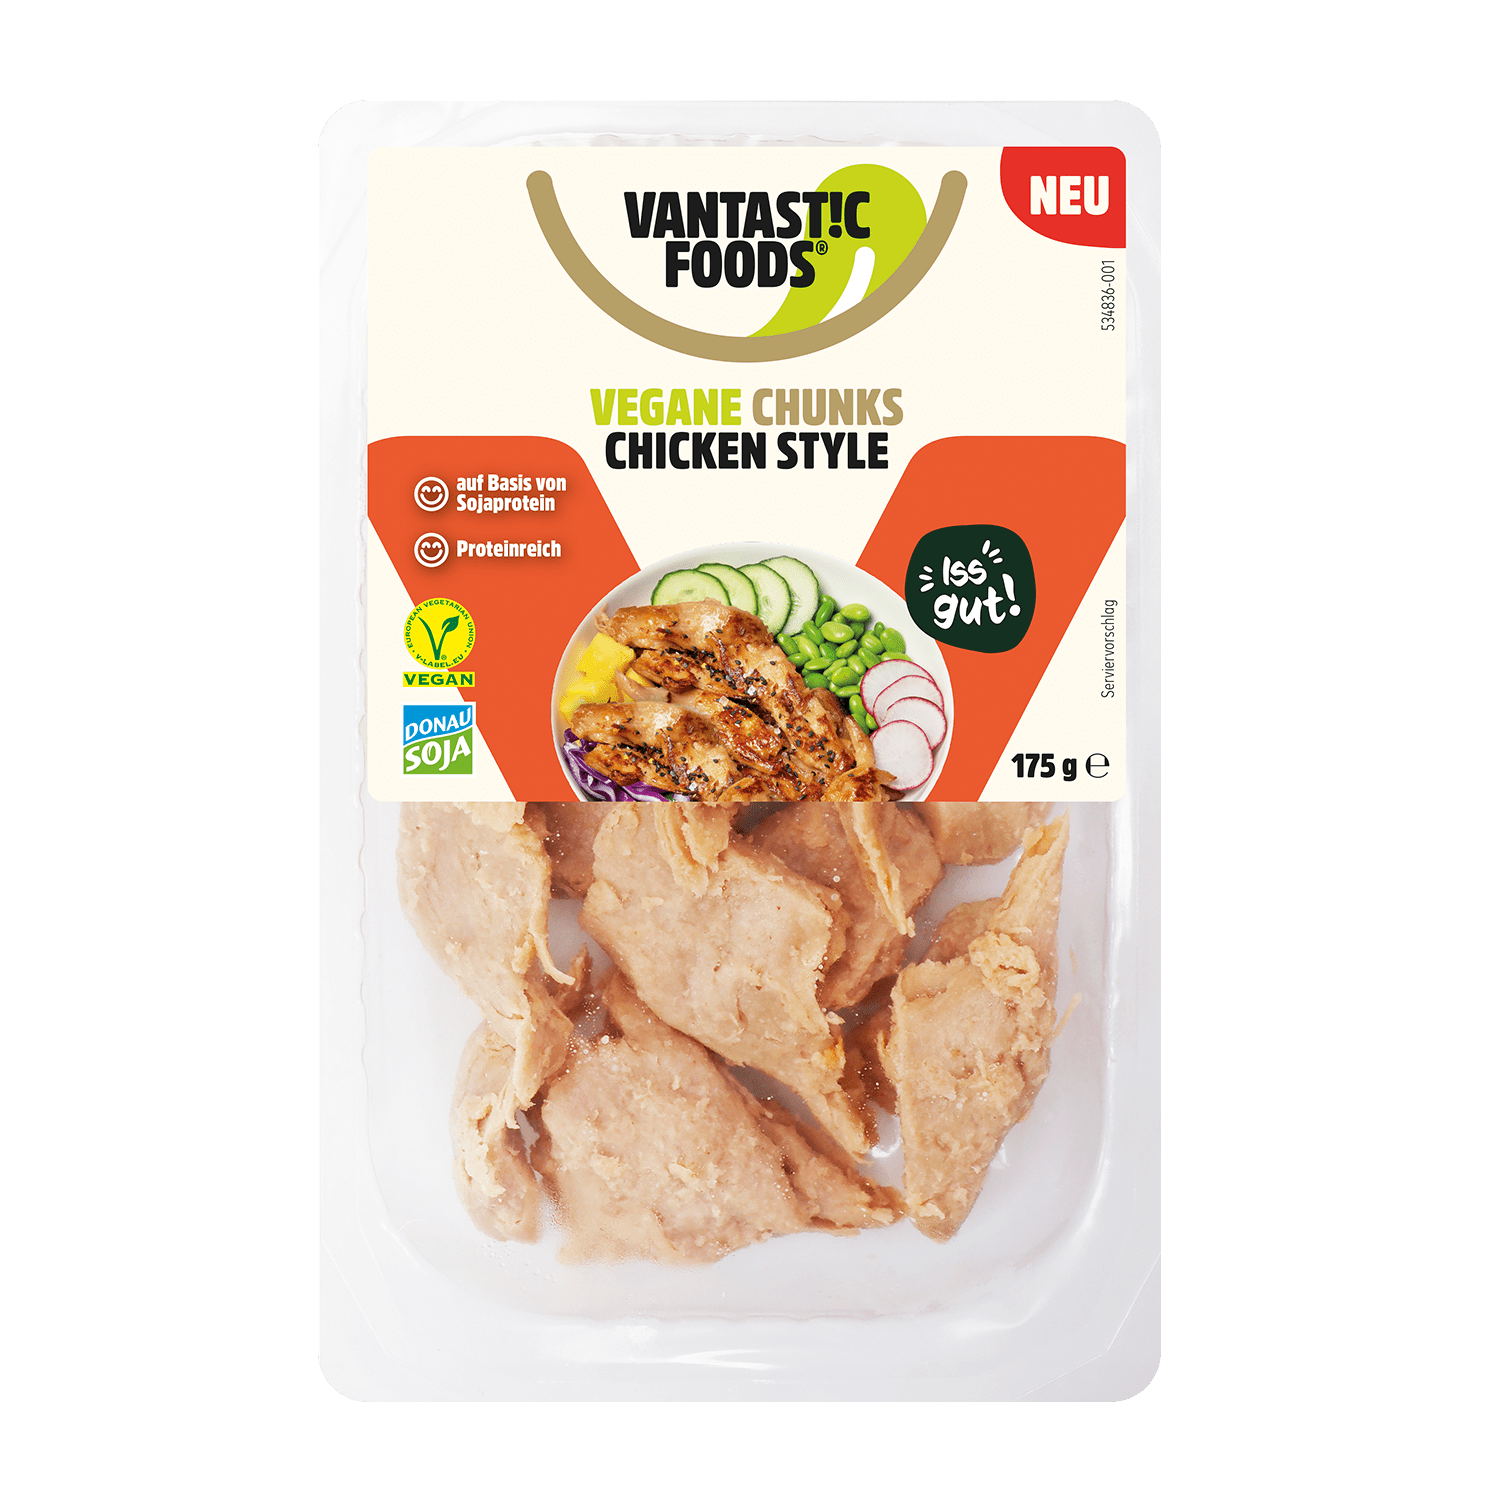 Vegane Chunks Chicken Style, 175g